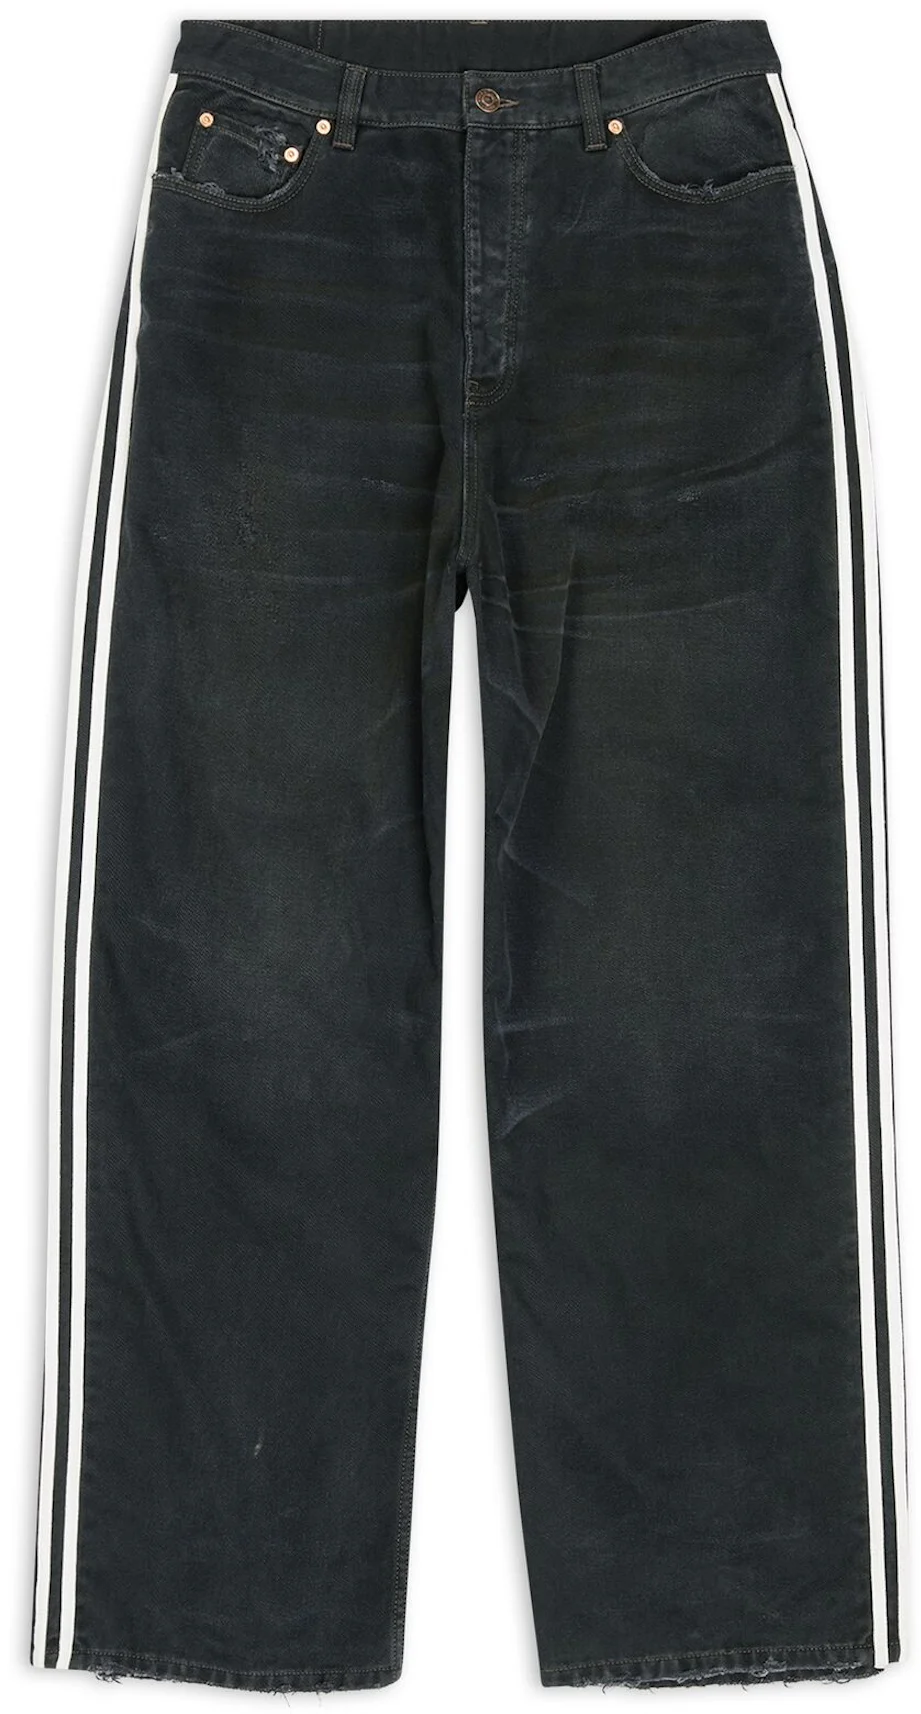 https://images.stockx.com/images/Balenciaga-x-adidas-Large-Baggy-Pants-Black.jpg?fit=fill&bg=FFFFFF&w=1200&h=857&fm=webp&auto=compress&dpr=2&trim=color&updated_at=1667595034&q=60